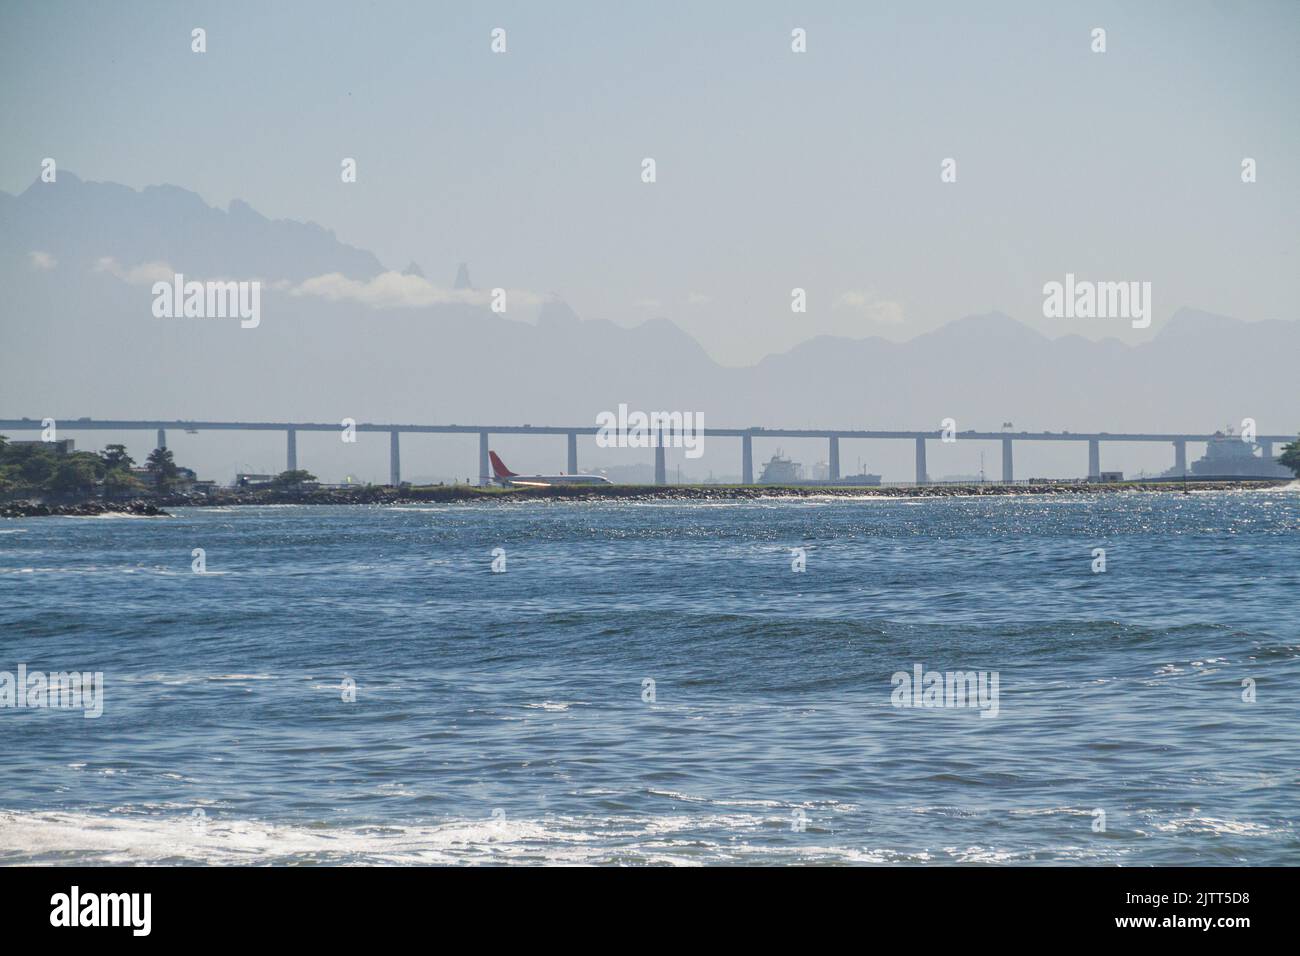 Guanabara Bay, Santos Dumont Airport, Rio x Niteroi Bridge, and the Serra dos Orgaos in the background in Rio de Janeiro. Stock Photo